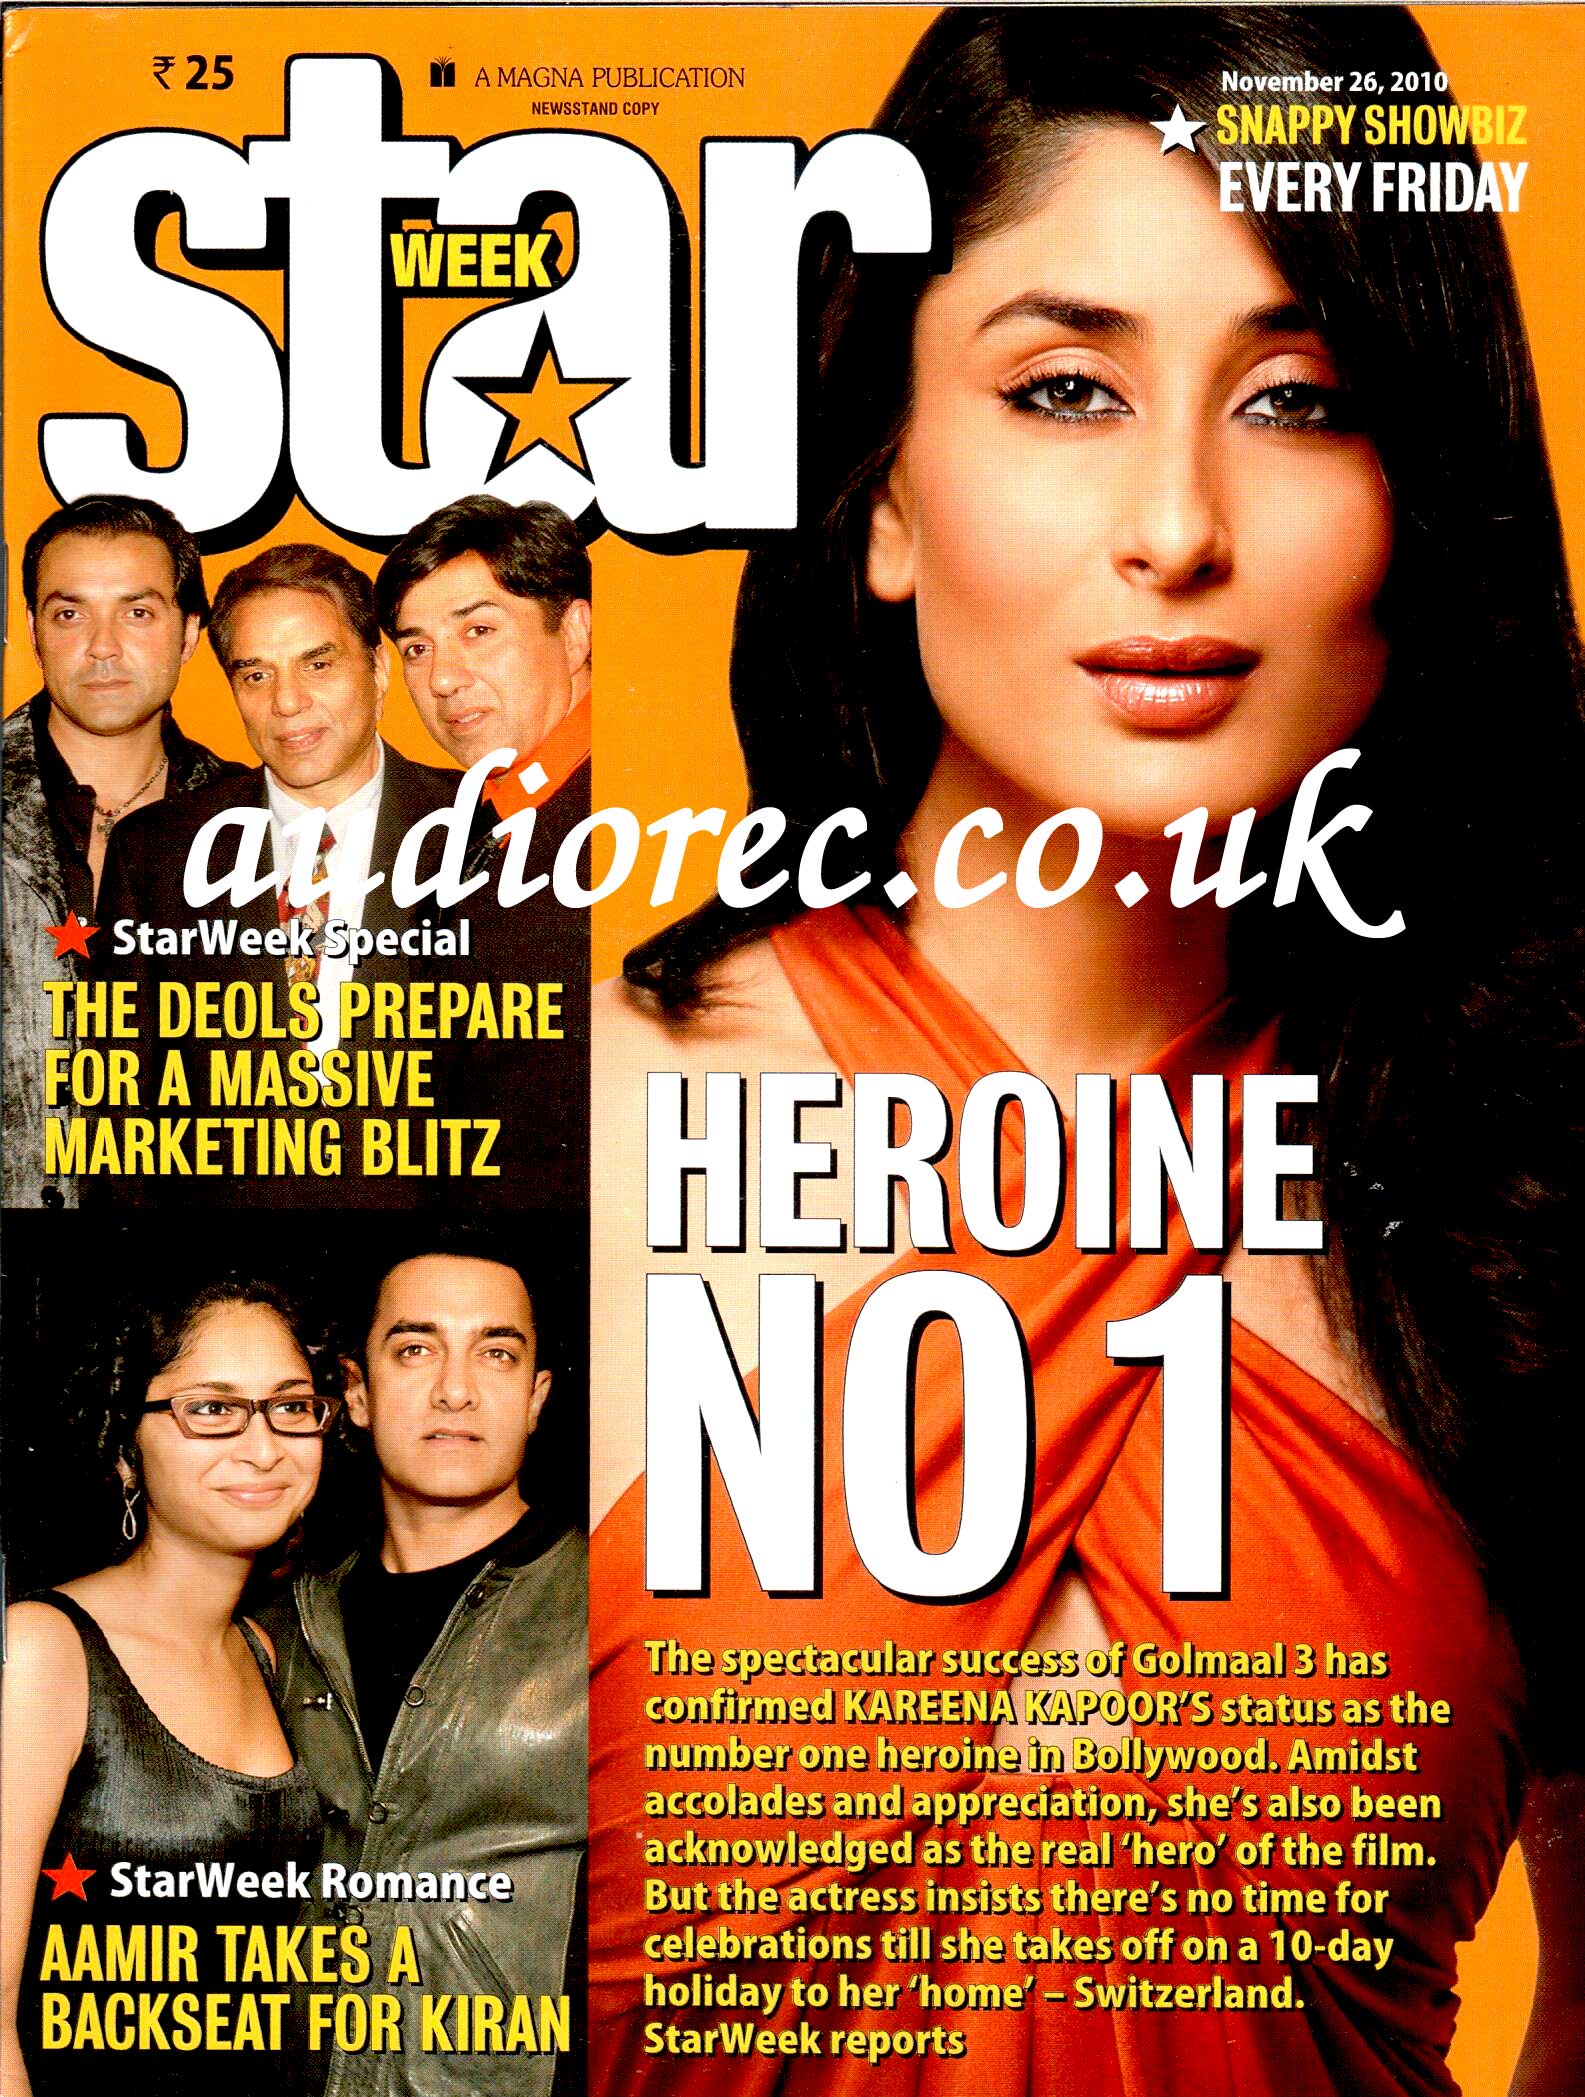 https://bollywoodchick.files.wordpress.com/2010/11/star-week-nov-26-kareena-kapoor-is-heroine-no-1.jpg